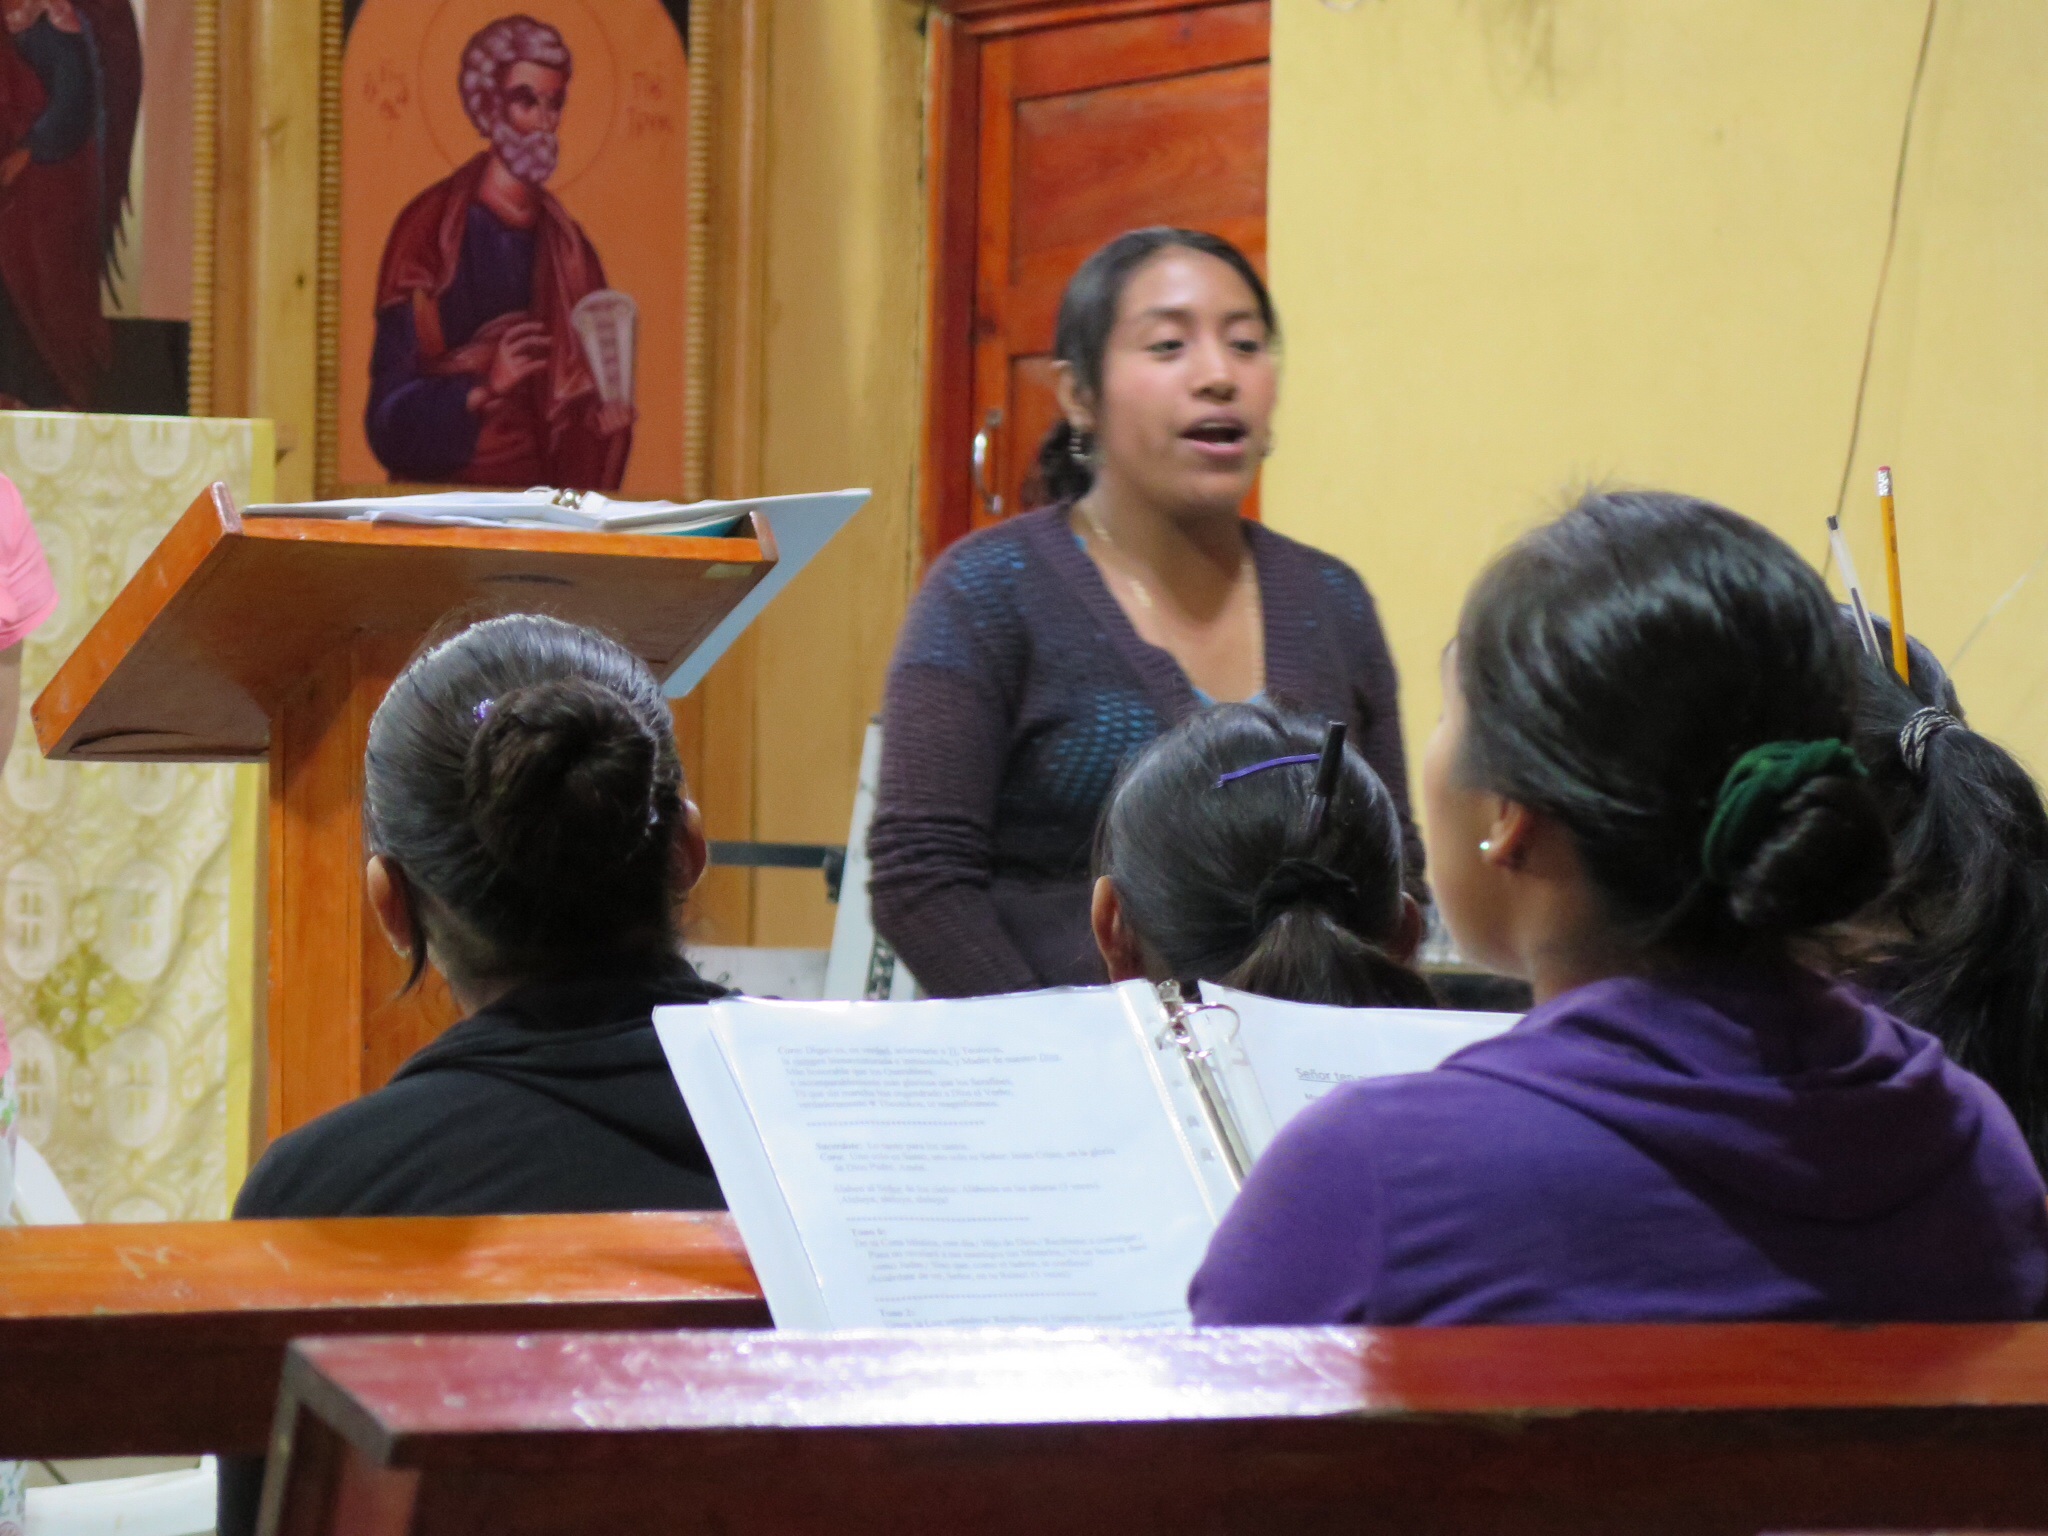 Juanita leads the choir in Aguacate